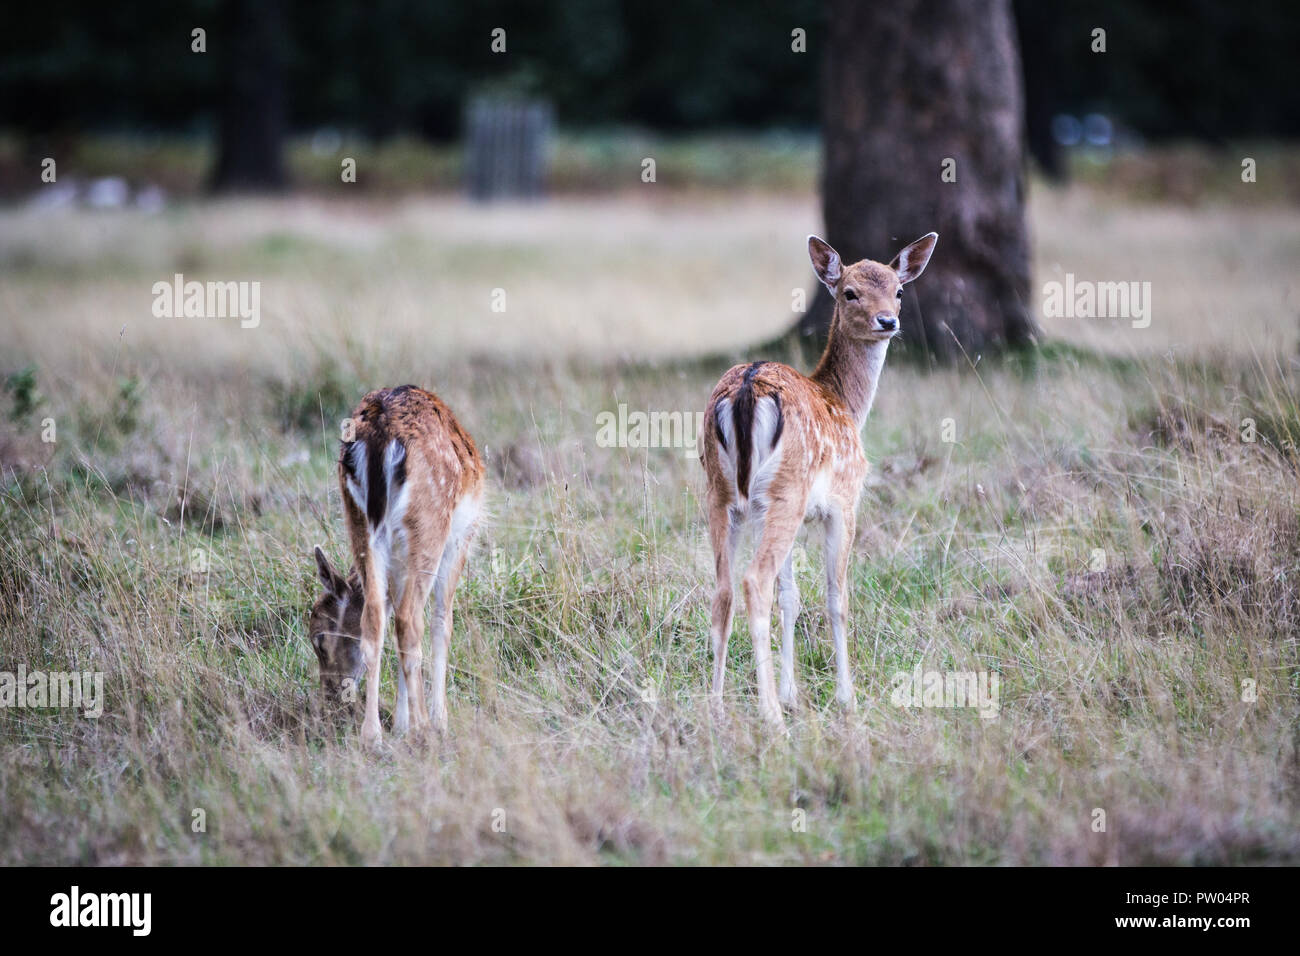 Deer in Bushy Park Stock Photo